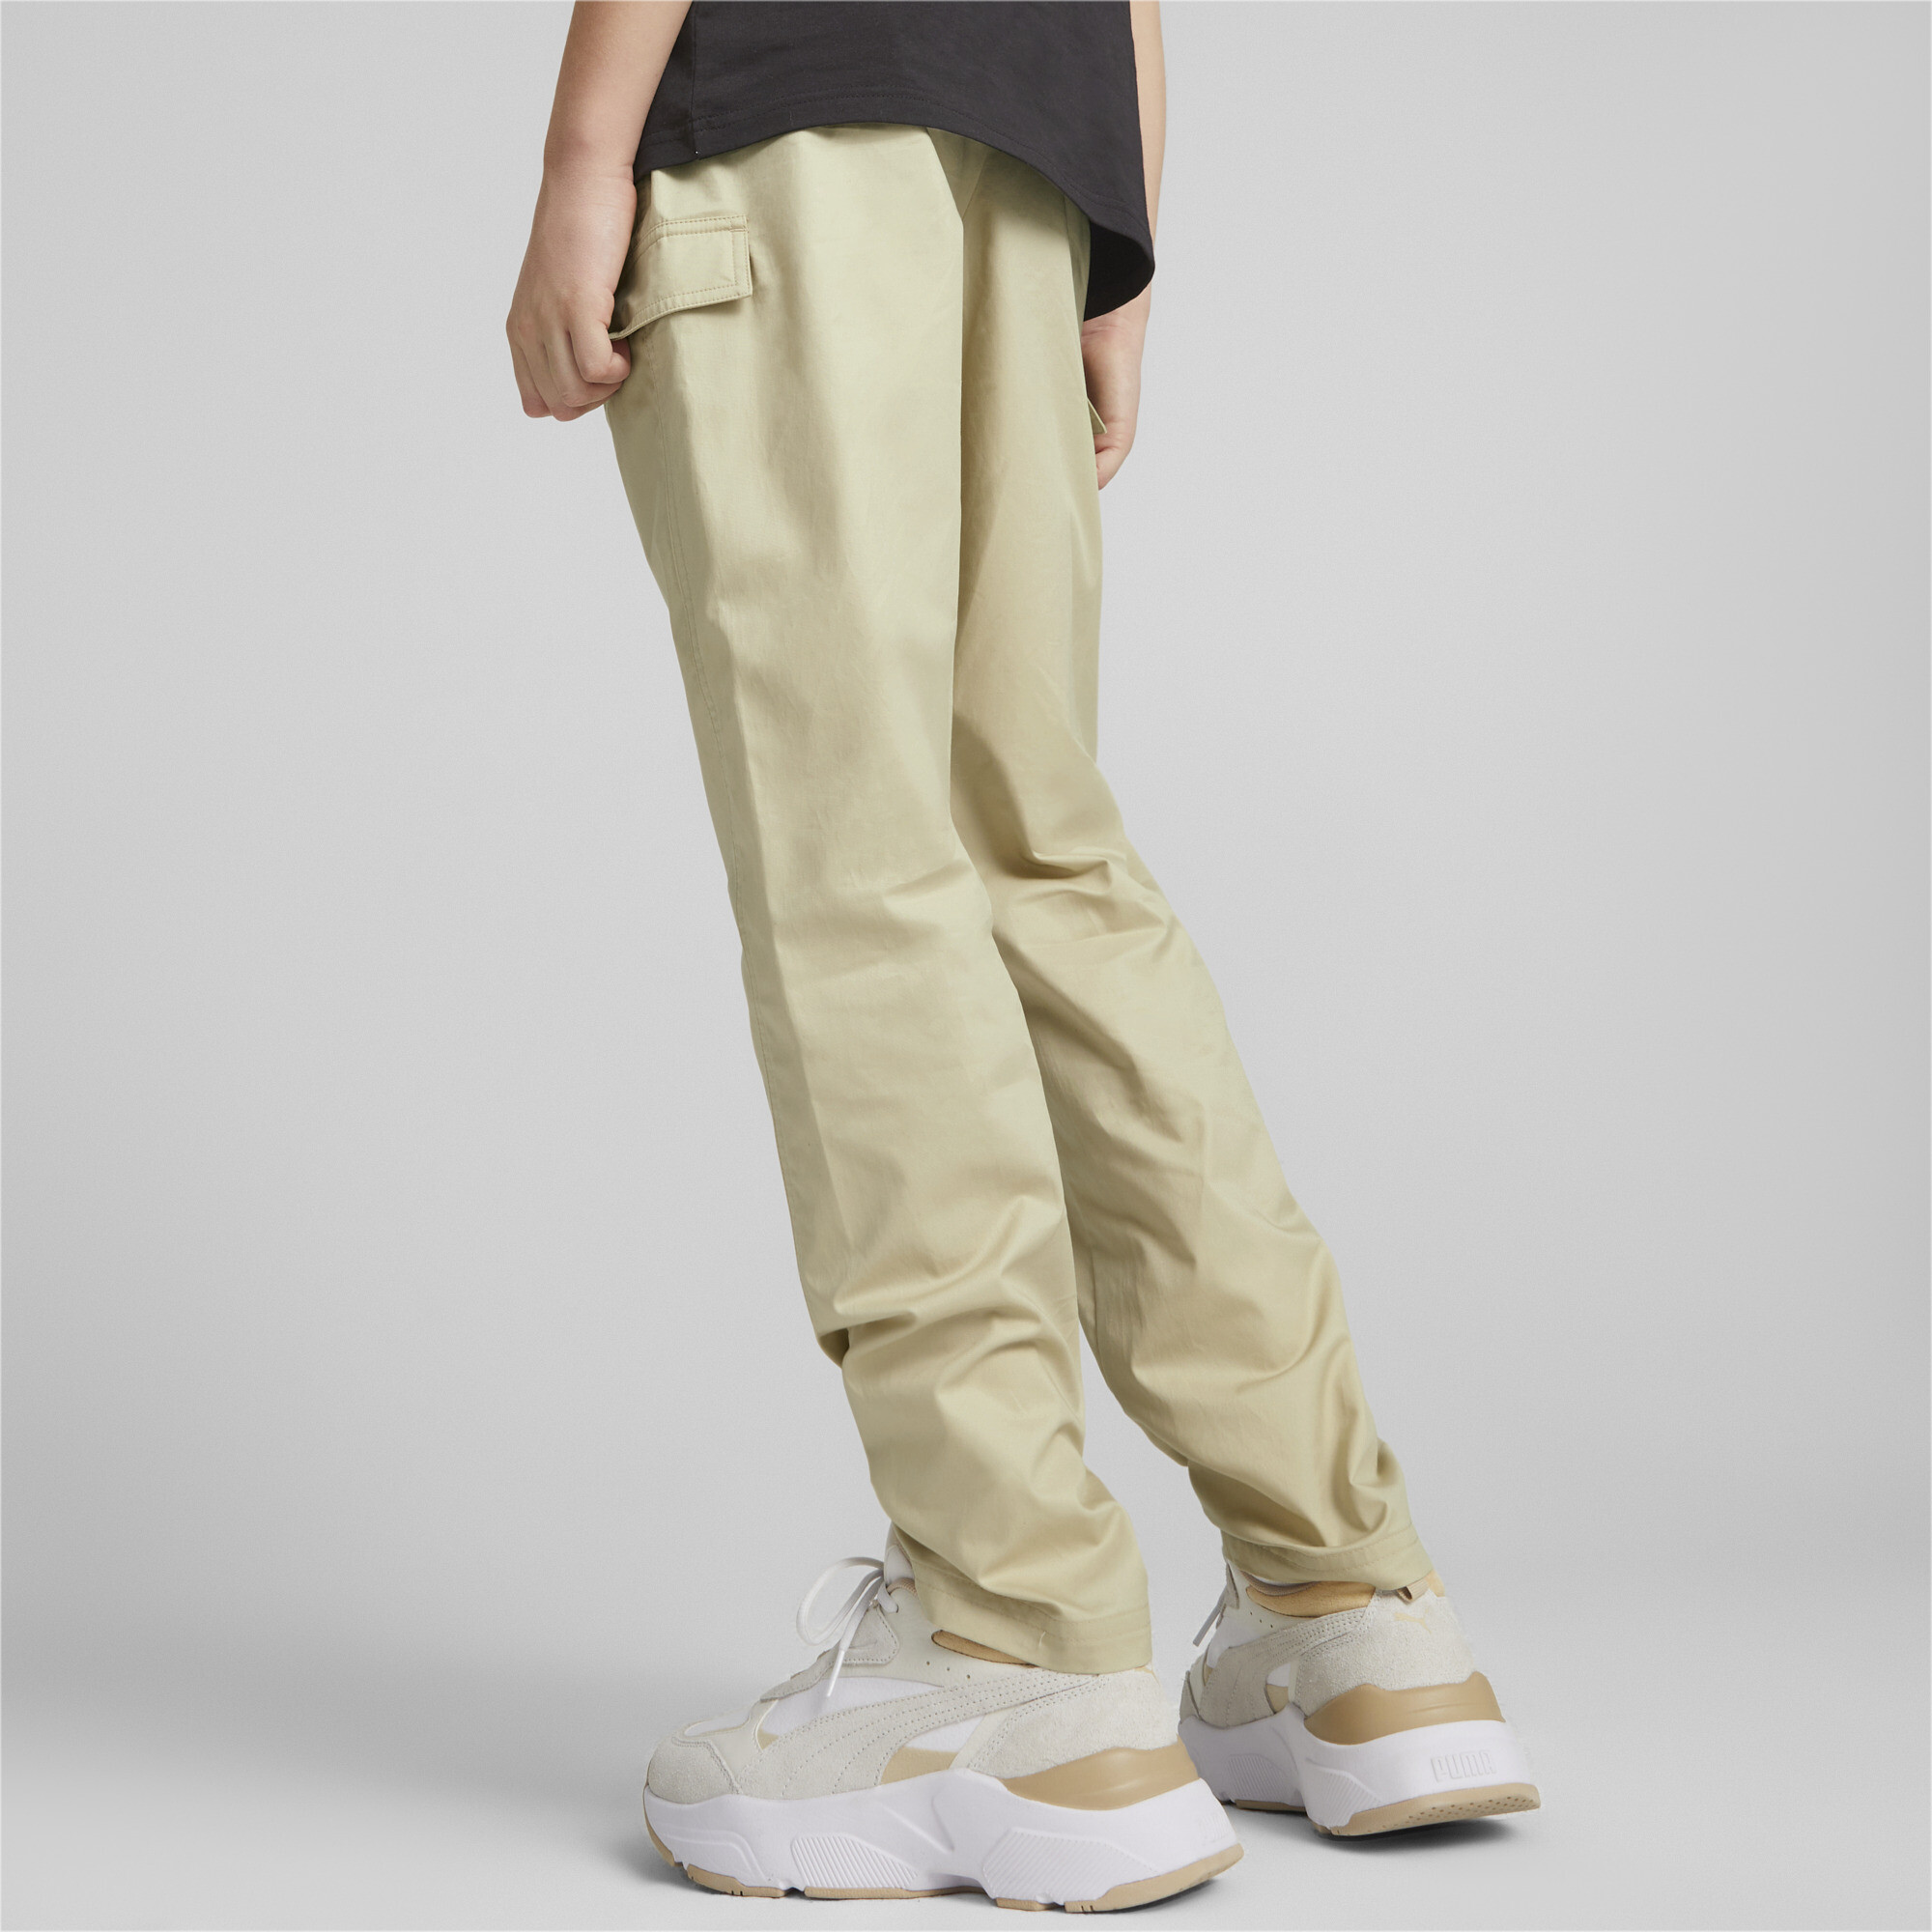 PUMA Classics Woven Sweatpants In Beige, Size 9-10 Youth